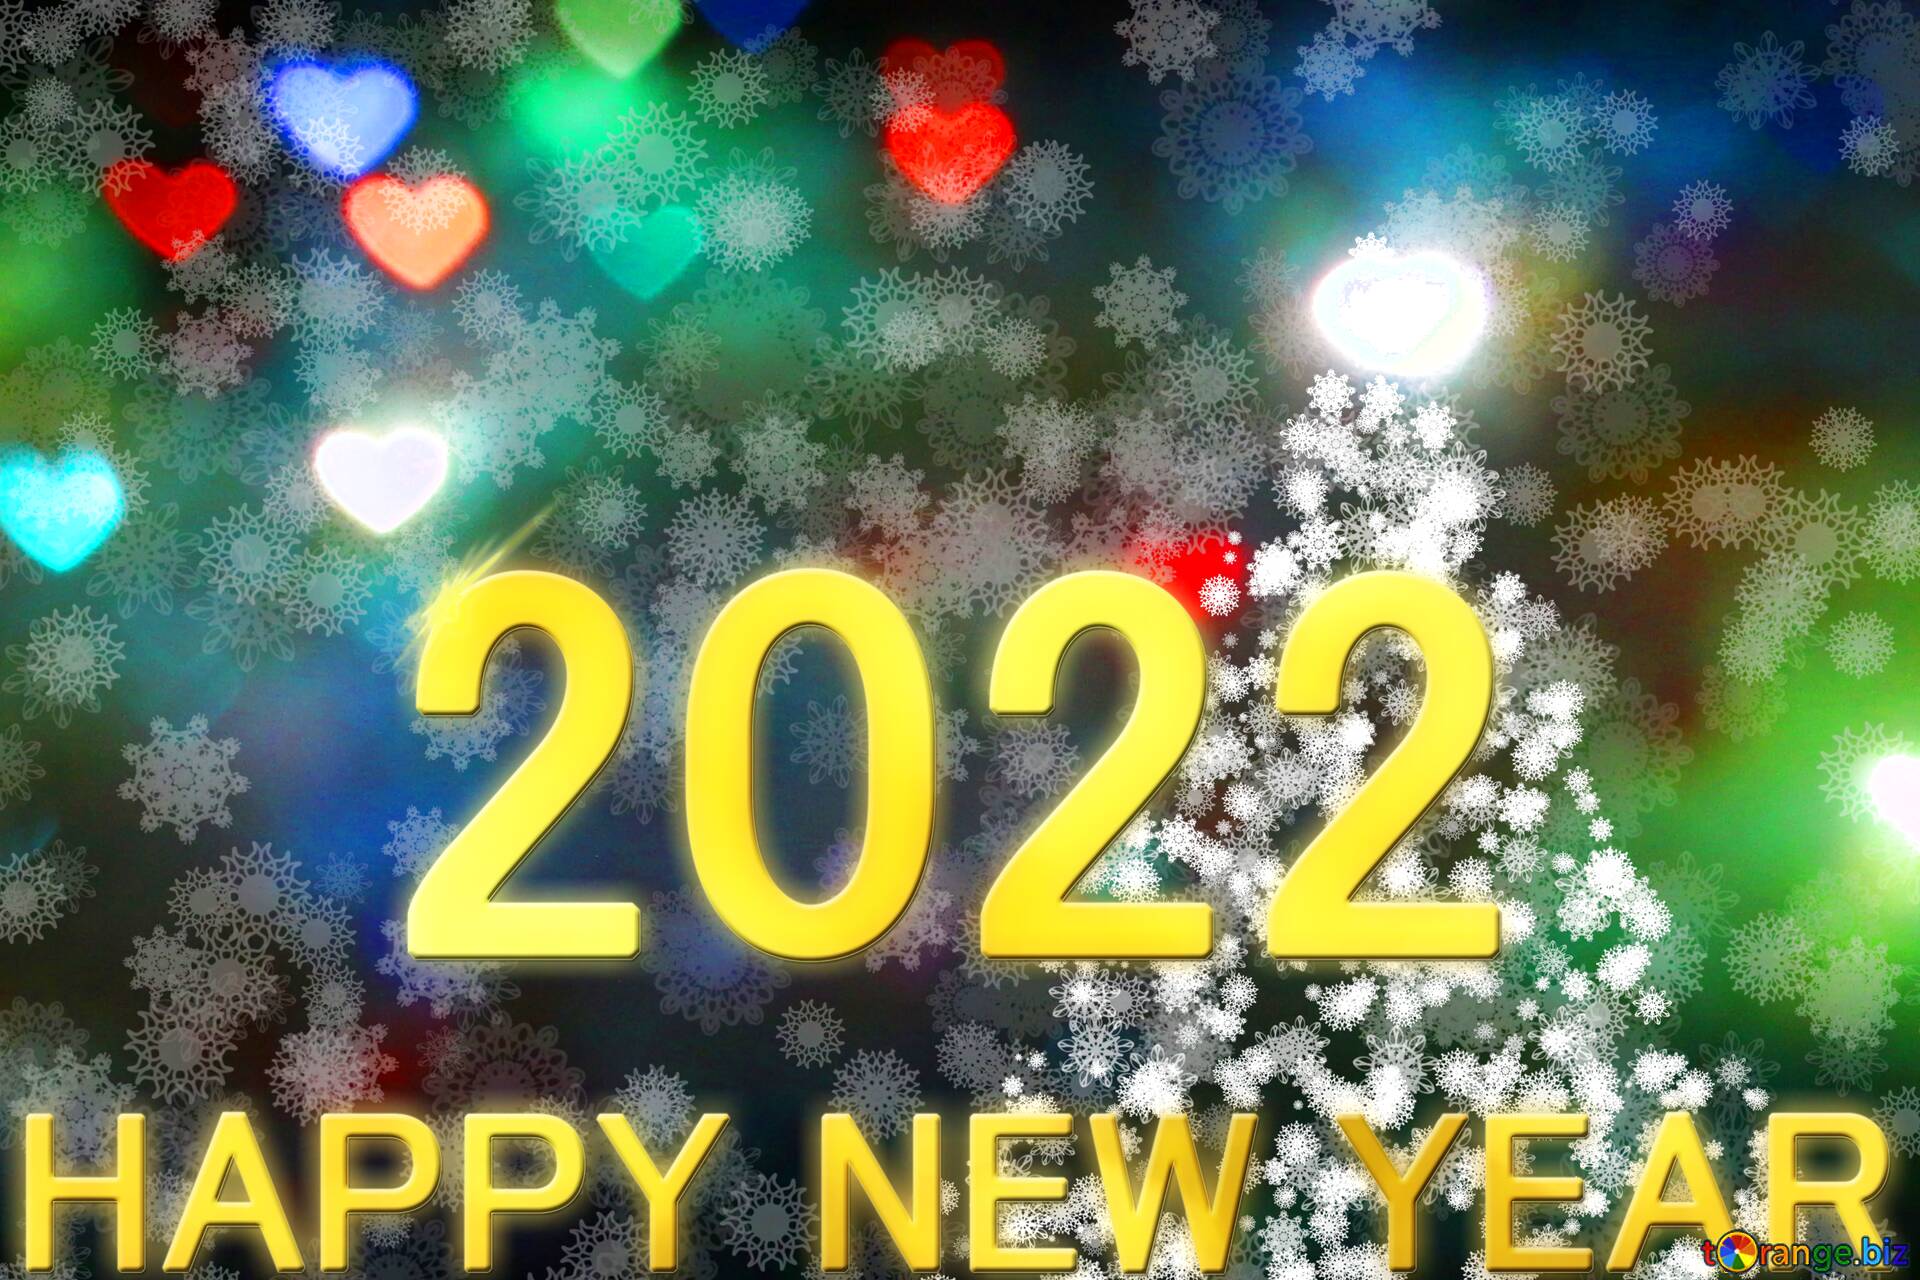 Happy New Year PicsArt Background Free Stock Image